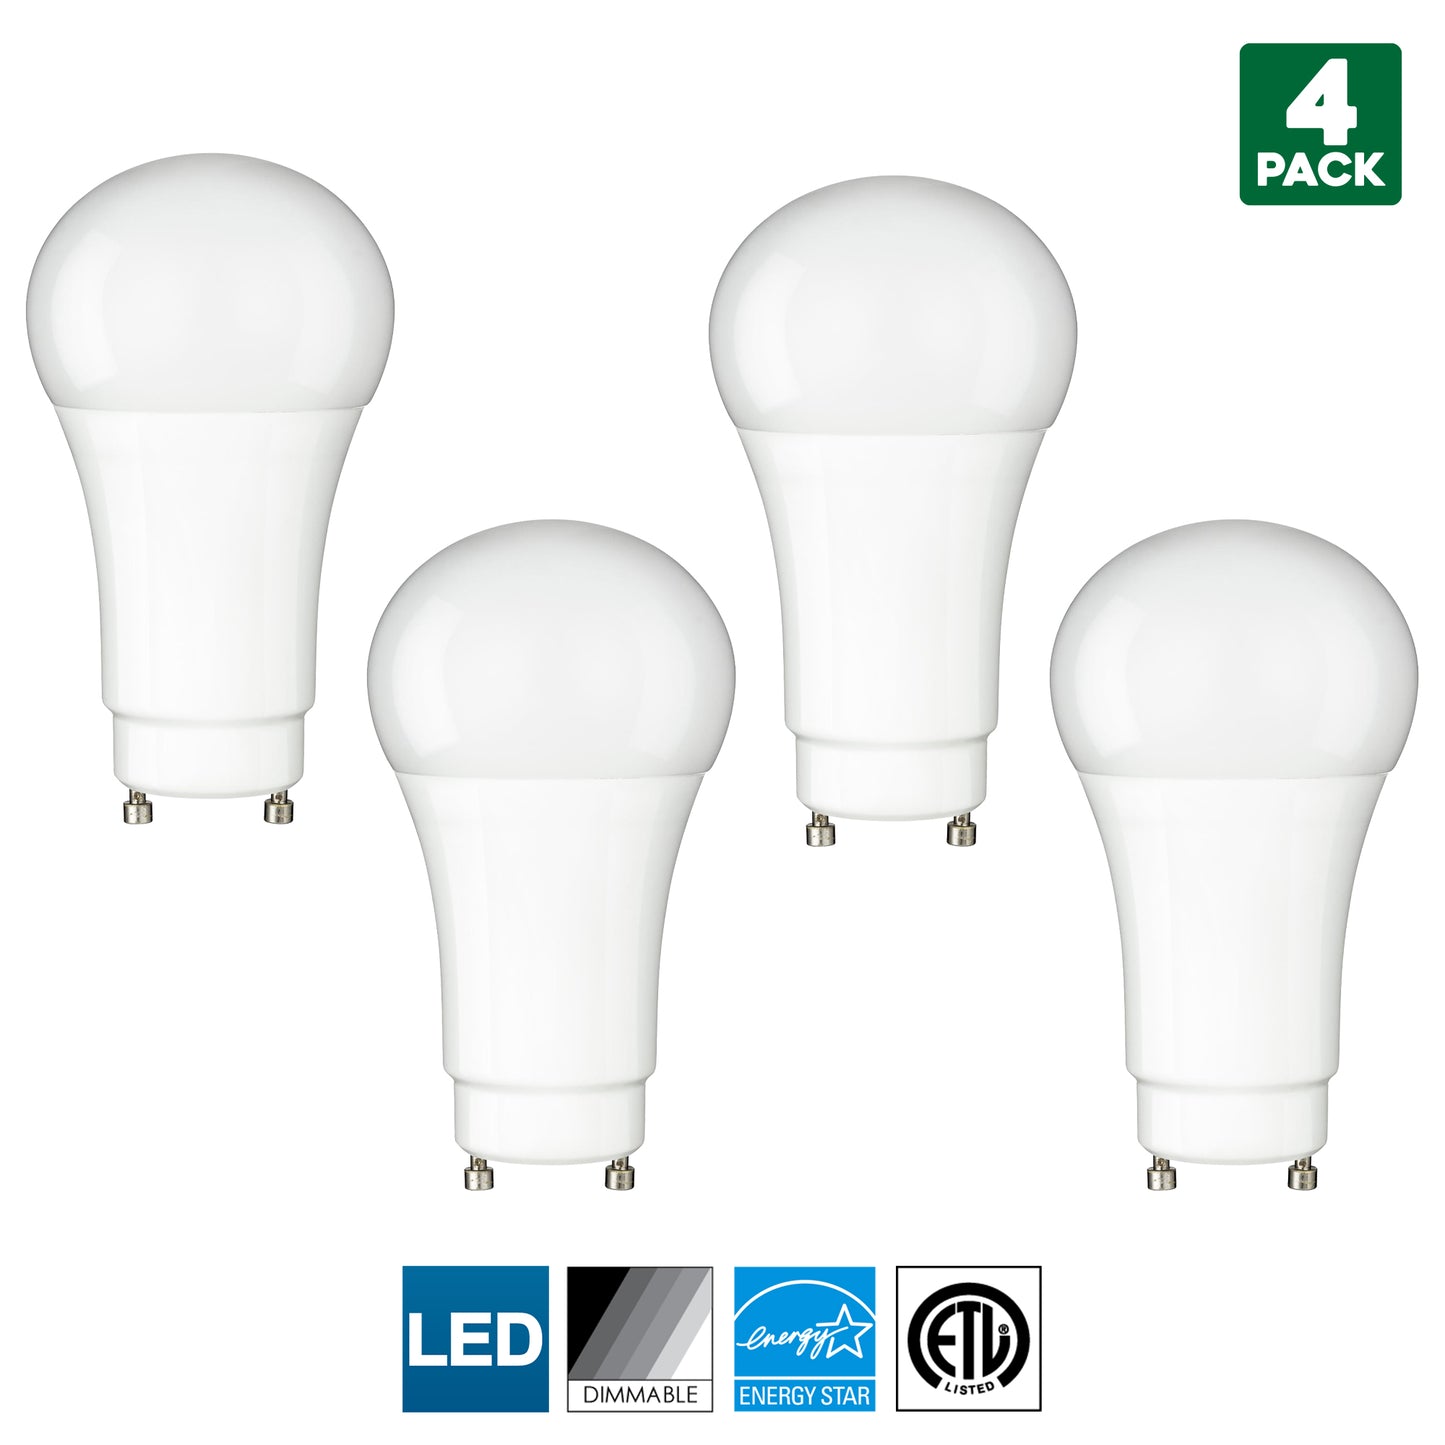 Sunlite GU24 Base LED Bulb, Dimmable, 10 Watt (60 W Equivalent), CFL Replacement, 5000K Super White, 800 Lumens, 15000 Hour Life Span